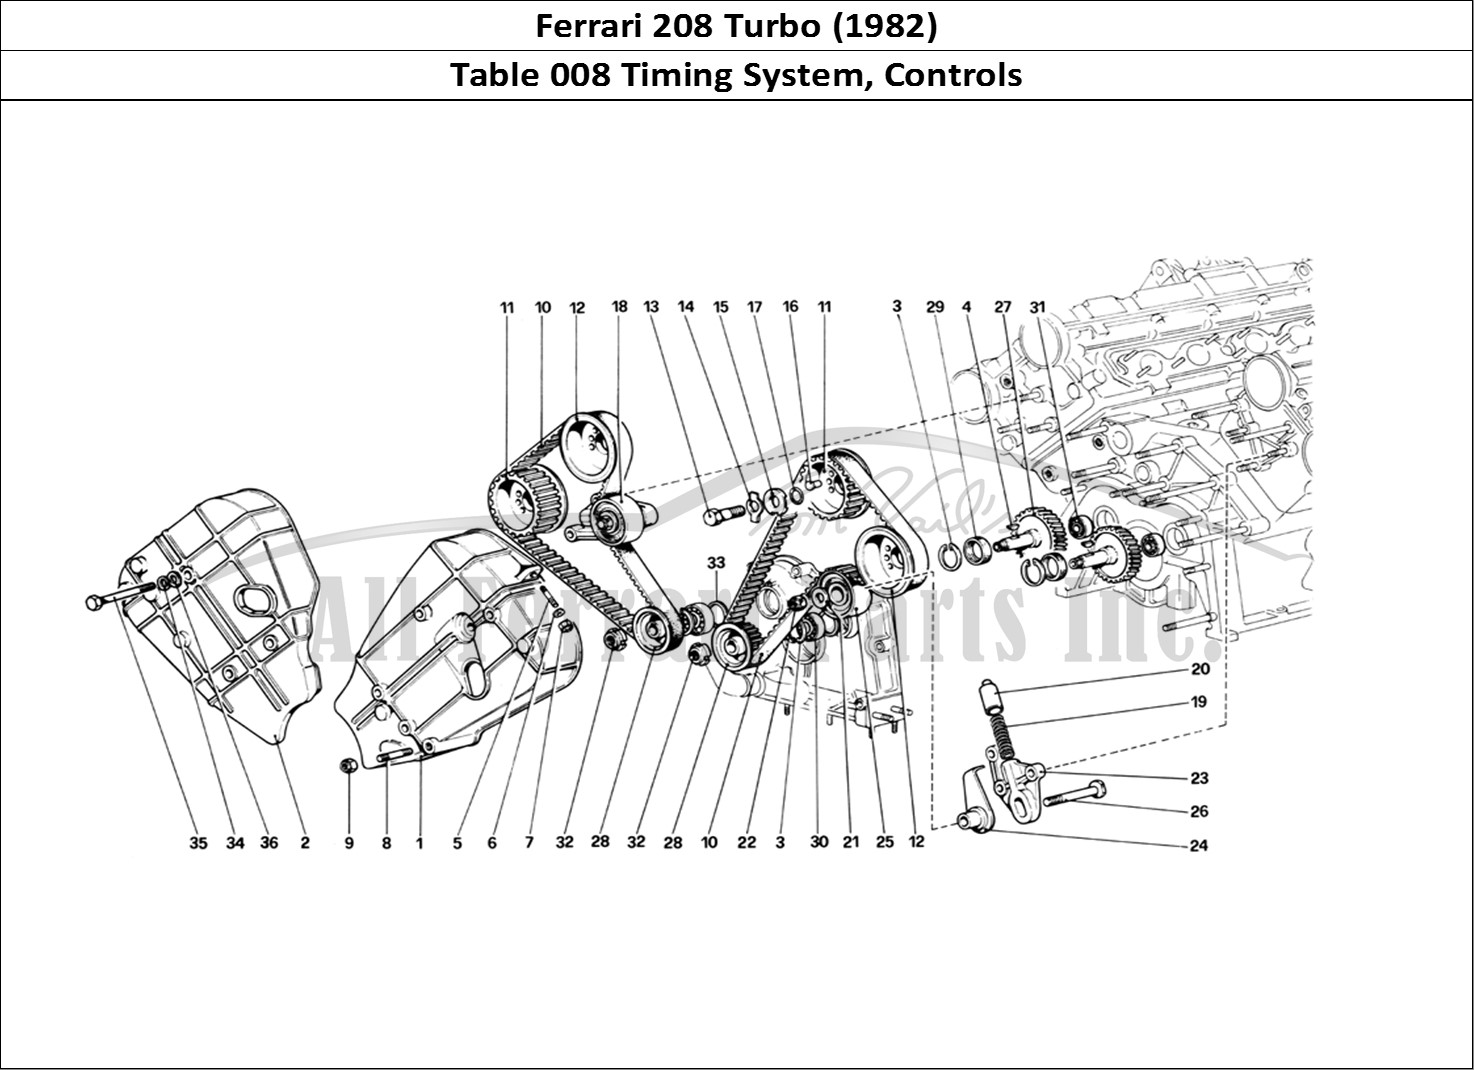 Ferrari Parts Ferrari 208 Turbo (1982) Page 008 Timing System - Controls